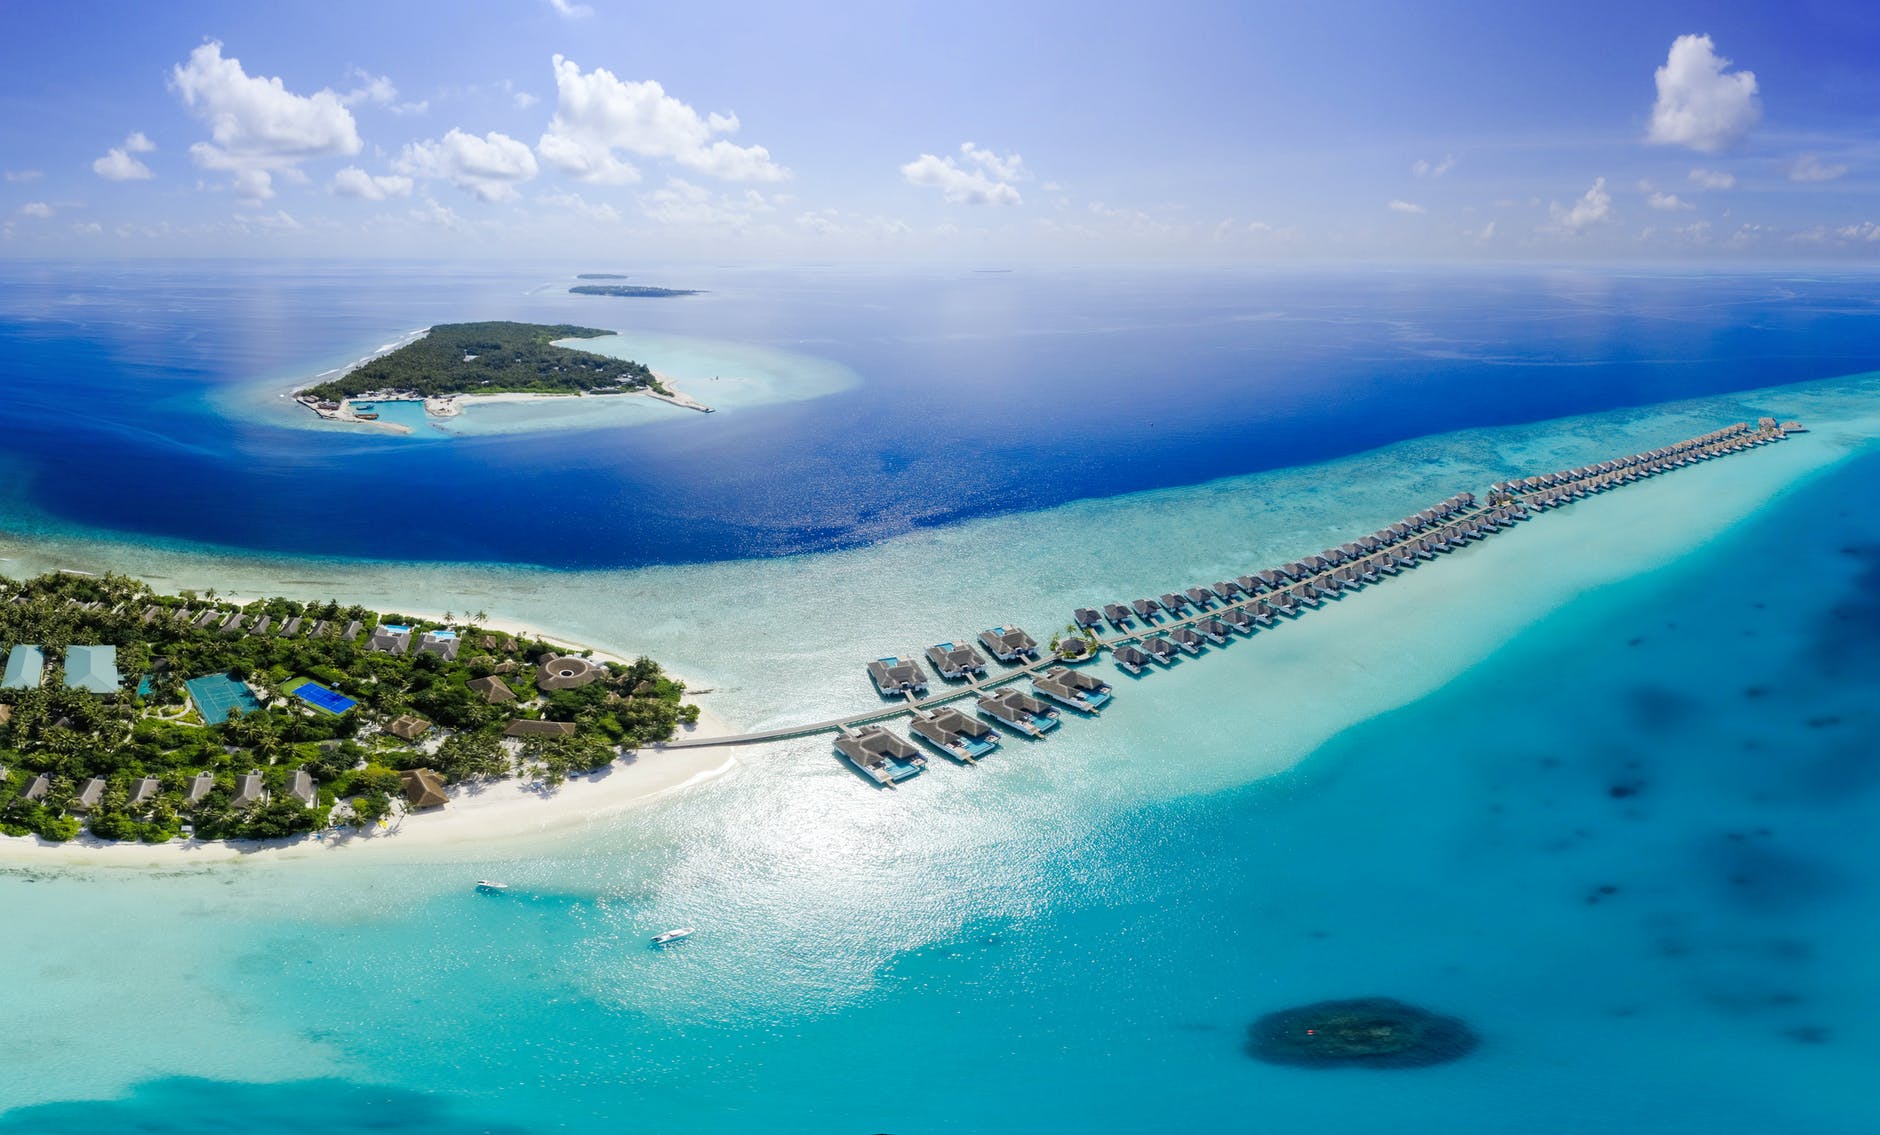 aerial photography of sand bars maldive islands utazas